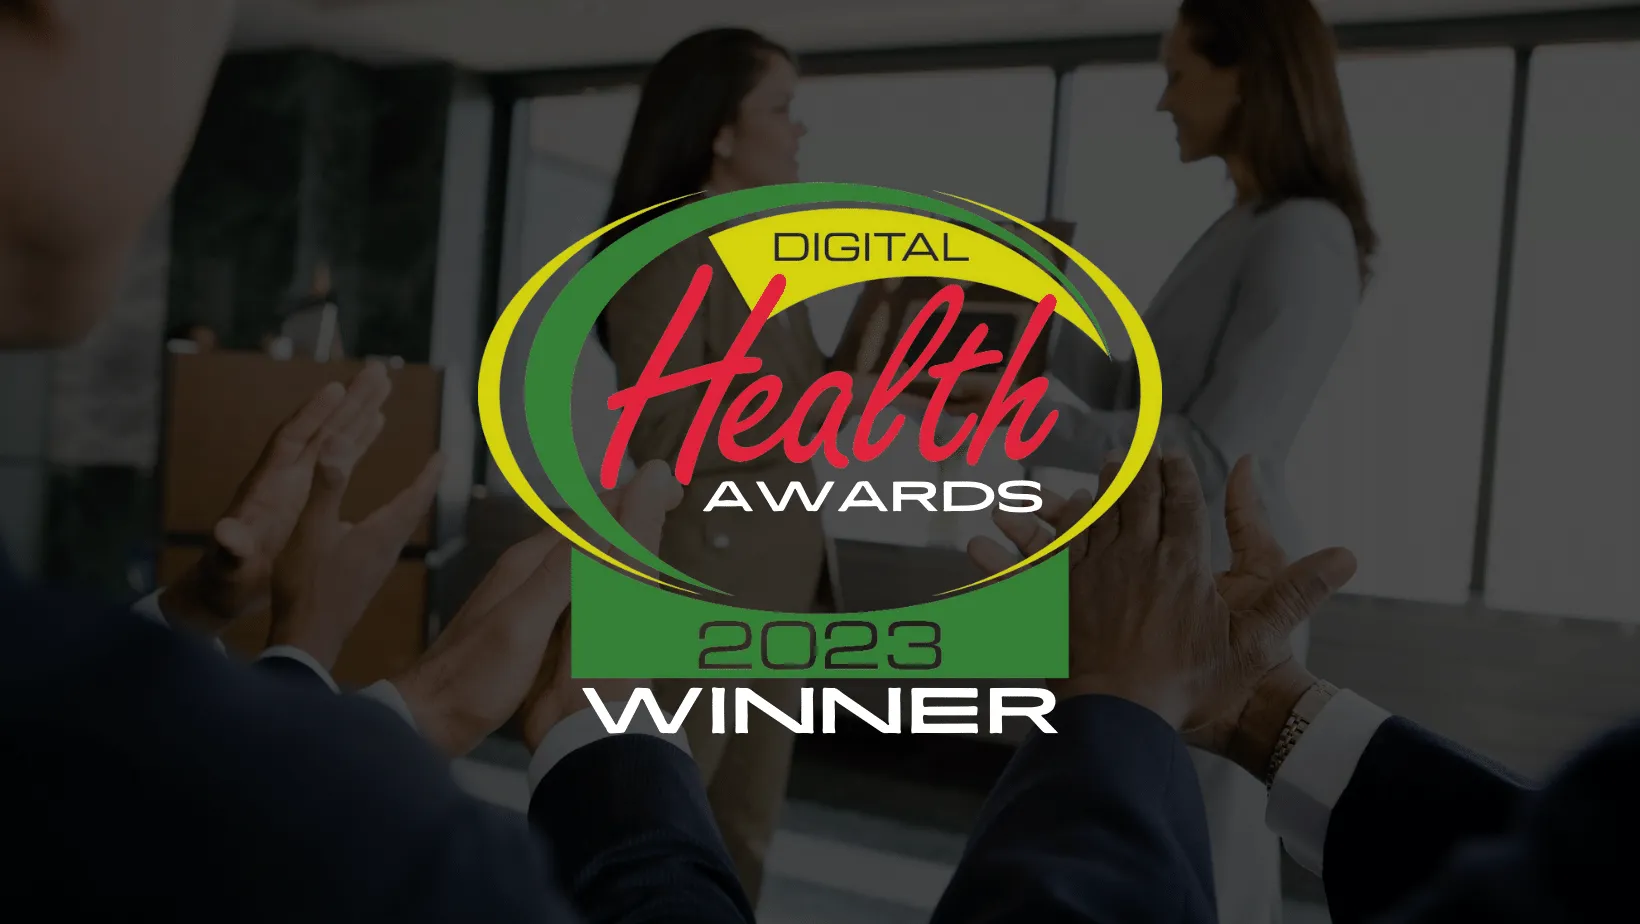 Digital Health award winner badge over a dark background.